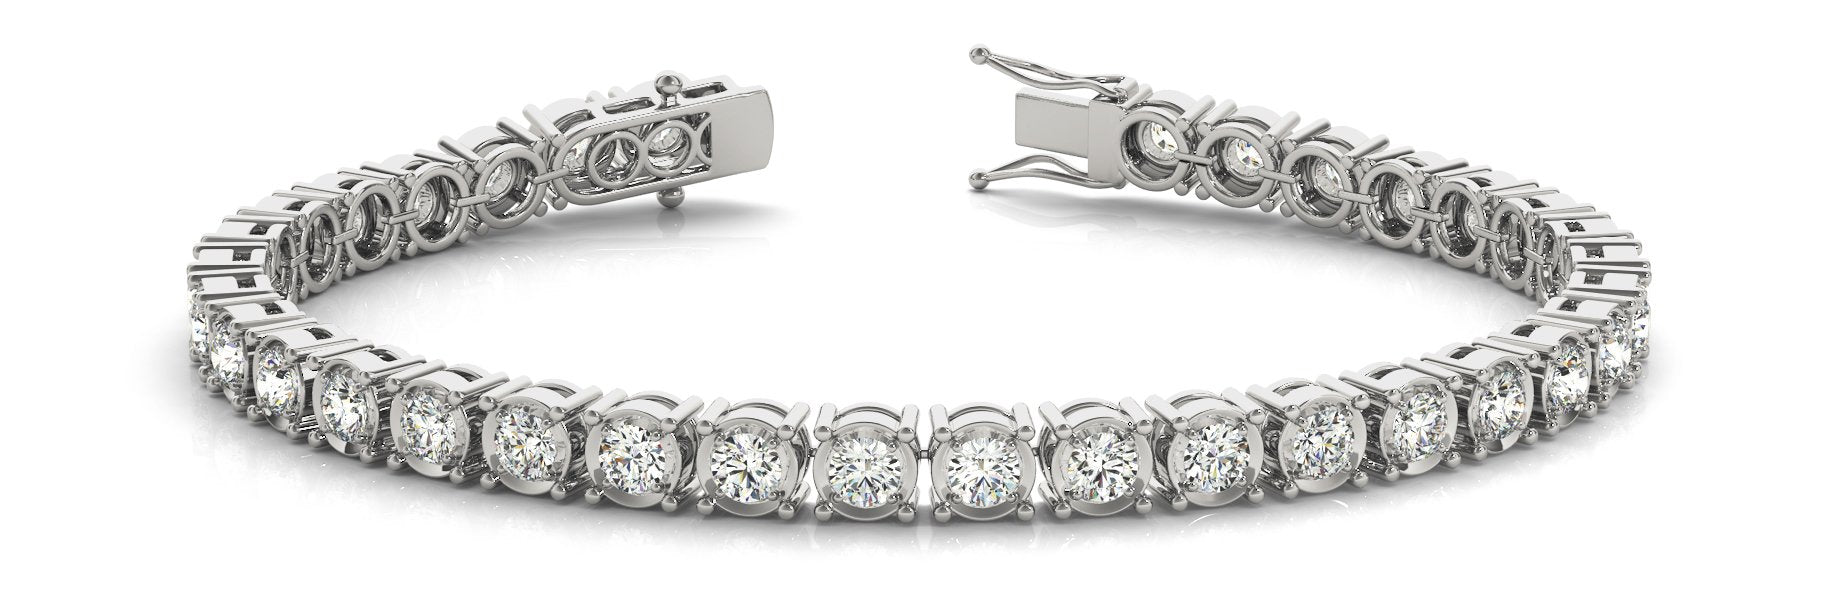 Fancy Diamond Bracelet Ladies 6.79ct tw - 14kt White Gold